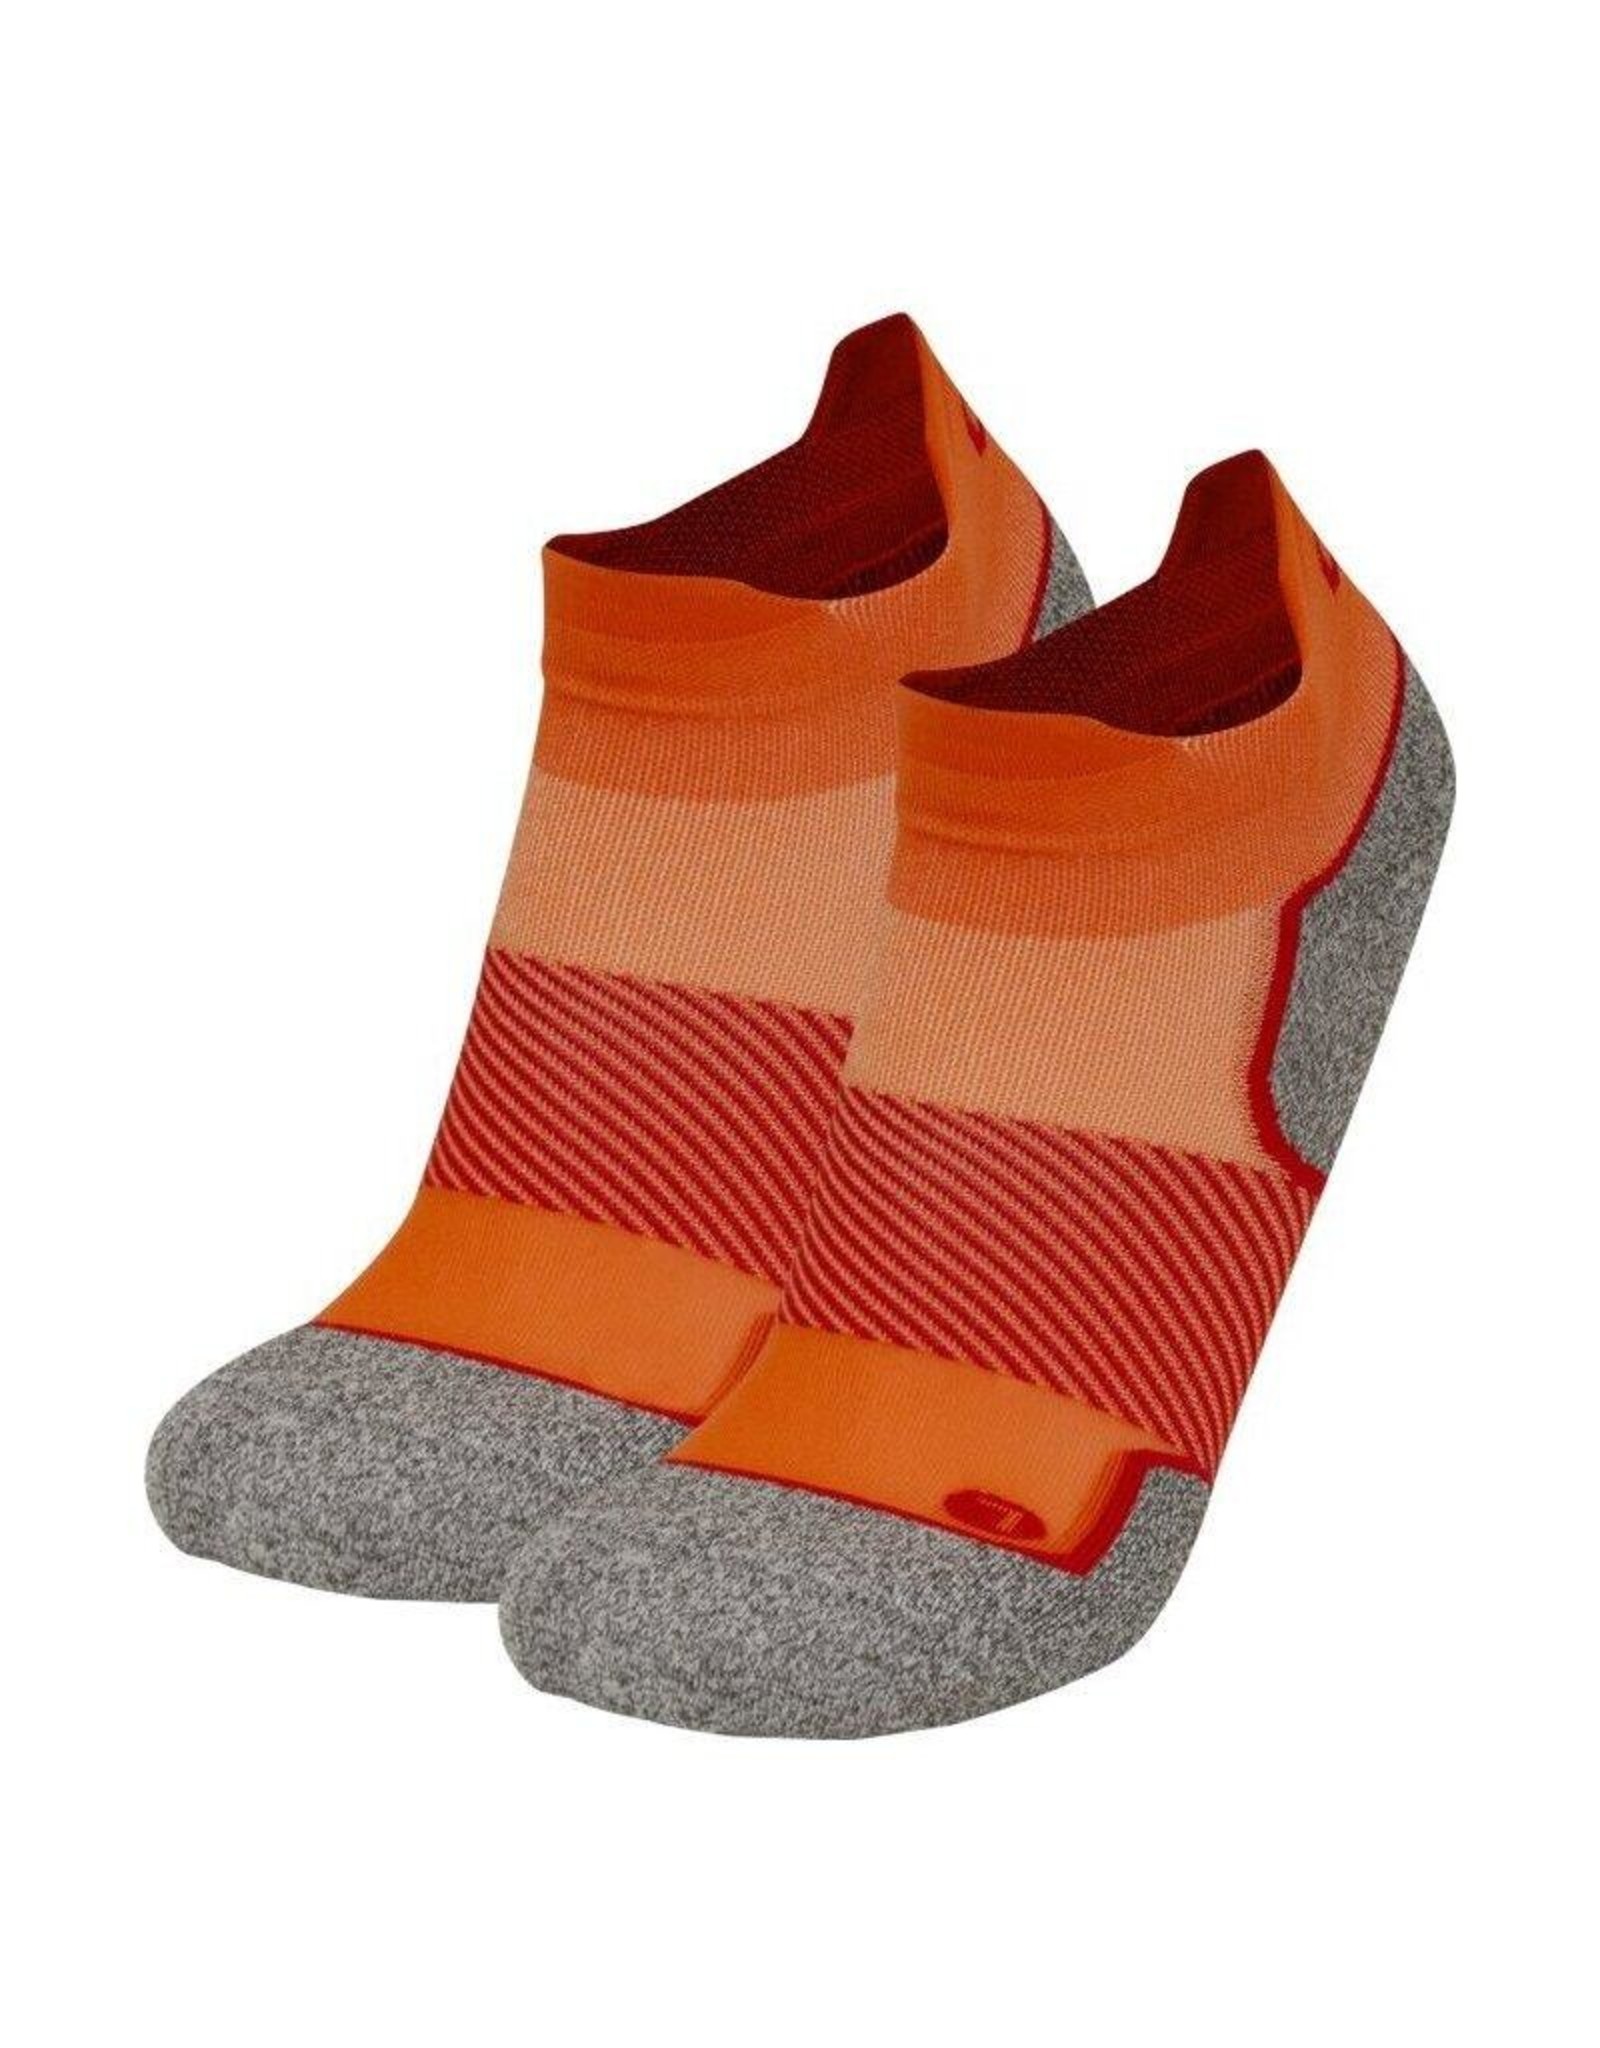 OS1ST AC4 Active Comfort Socks